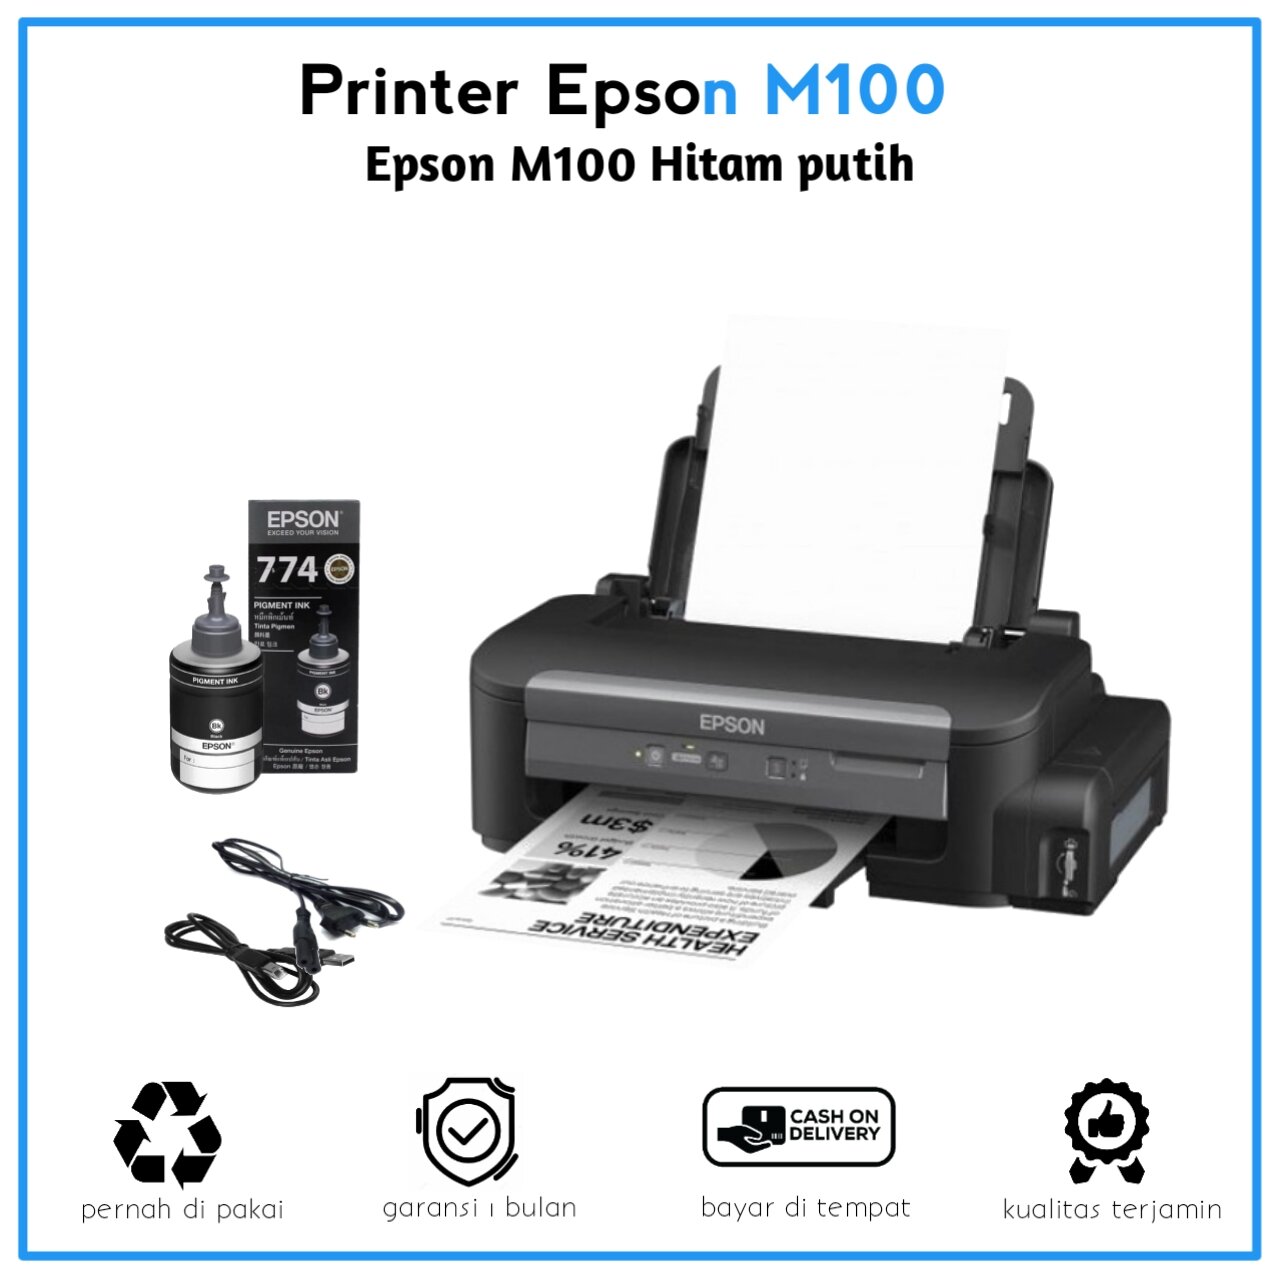 Printer Epson M100 Printer Cetak Hitam Putih Lazada Indonesia 0284